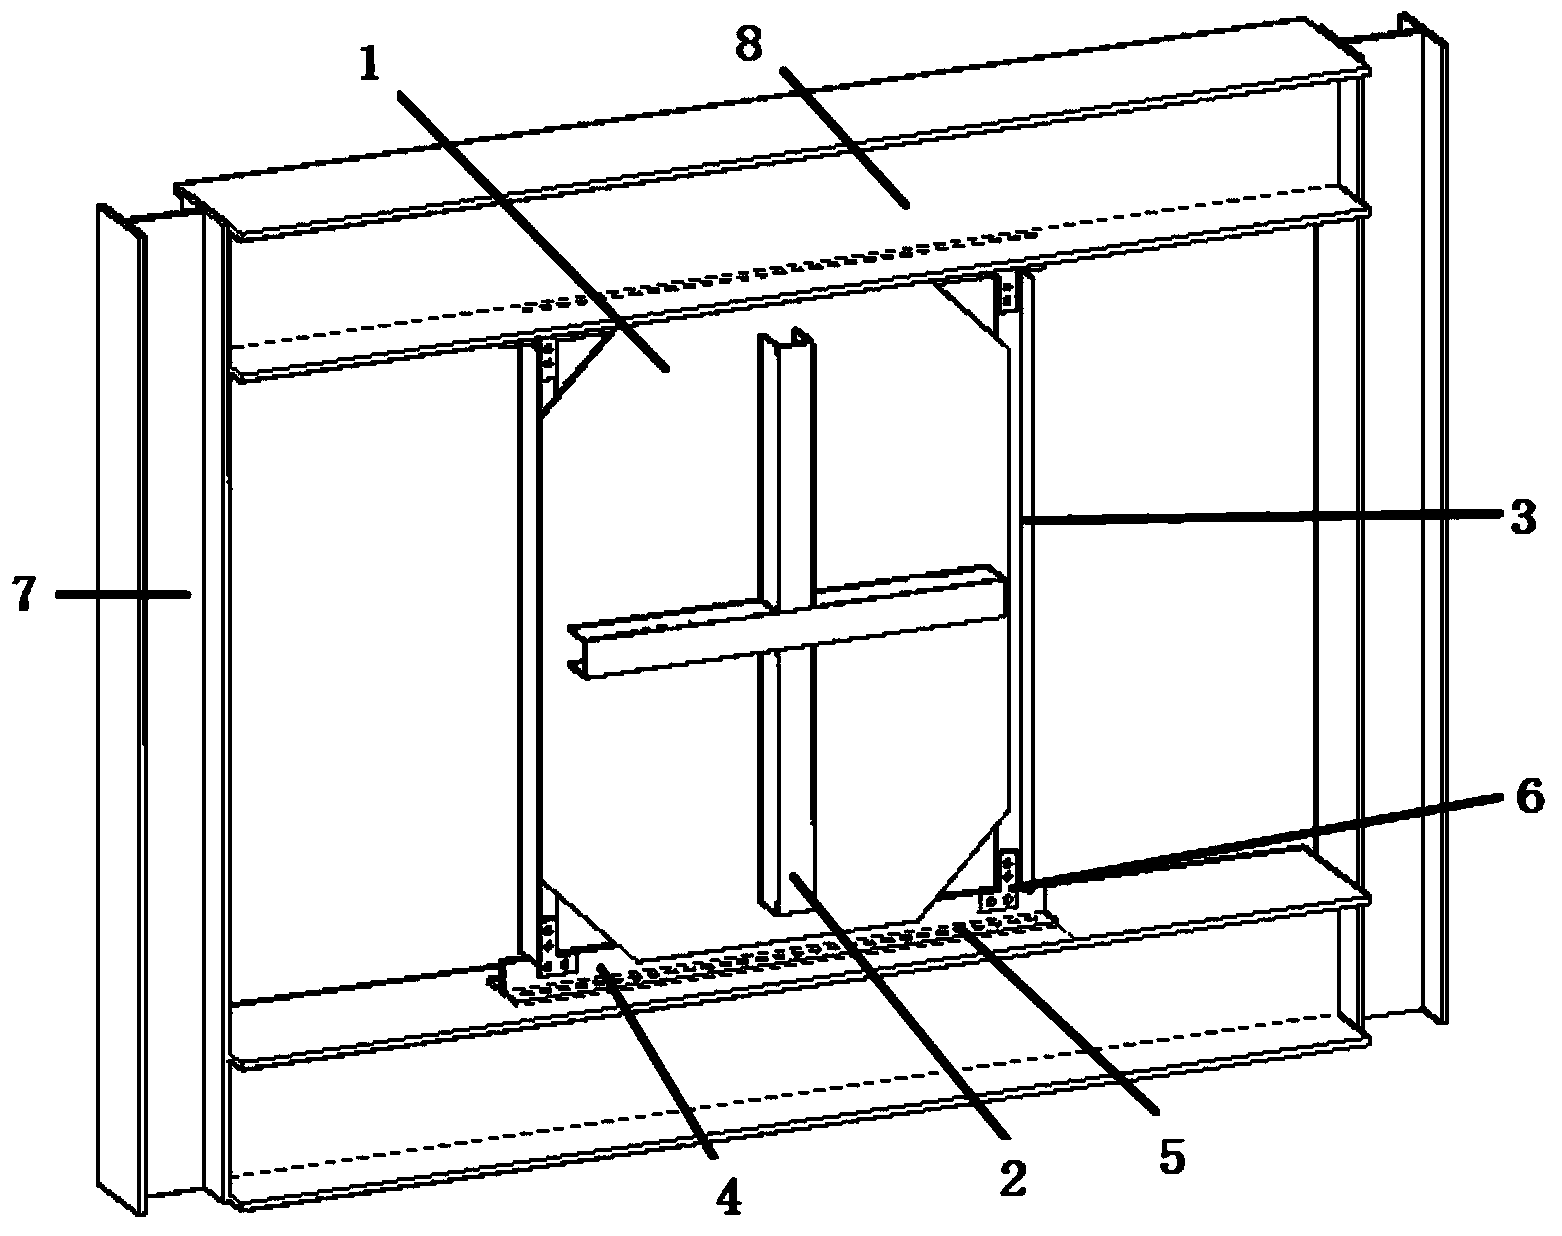 Assembling type reinforcing steel plate shear wall